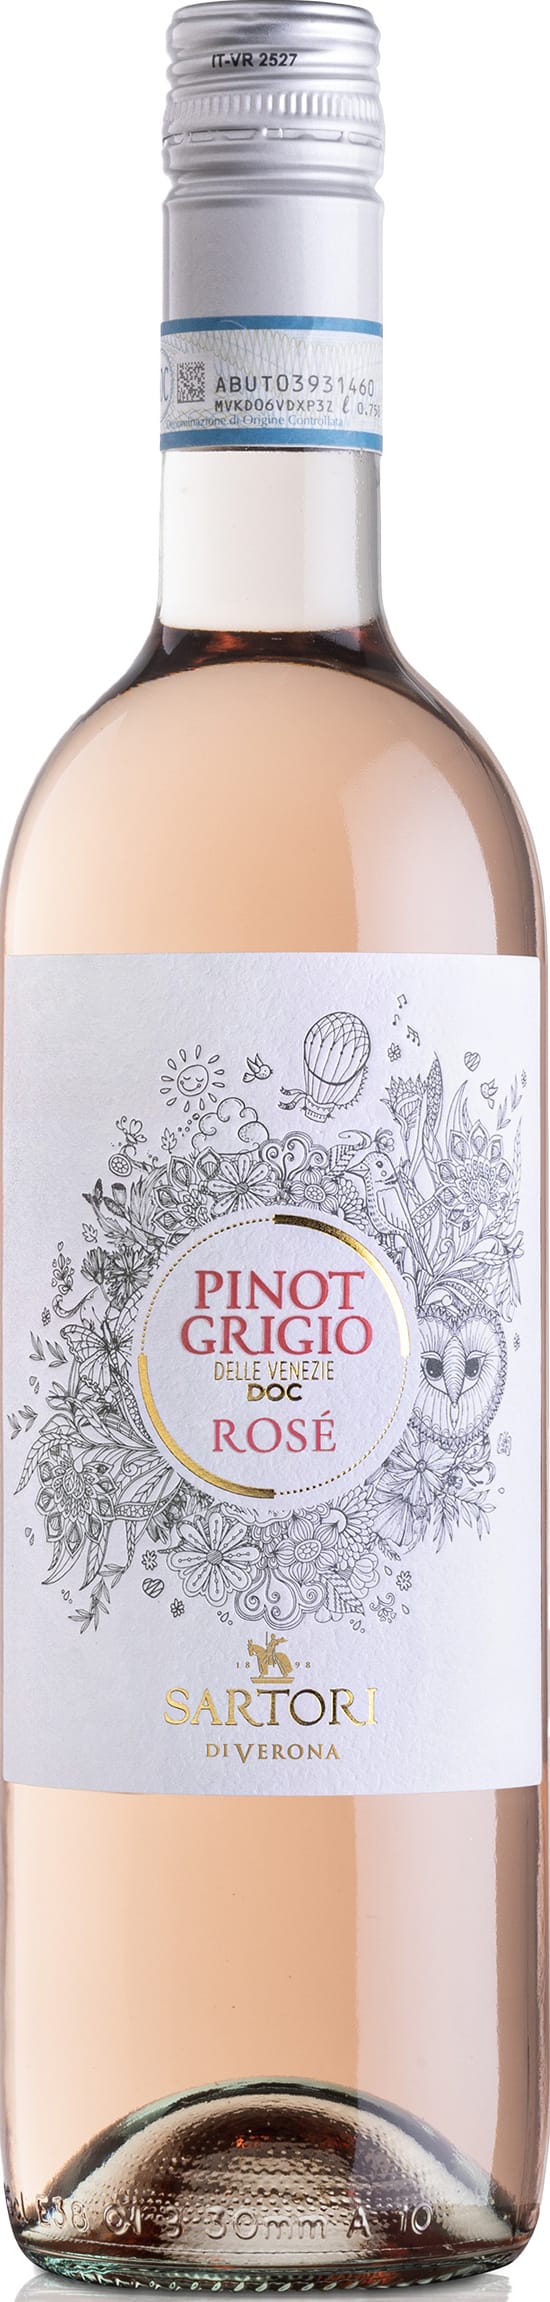 Sartori Pinot Grigio Rose' Venezie Vigna Mescita IGT 2022 75cl - Buy Sartori Wines from GREAT WINES DIRECT wine shop